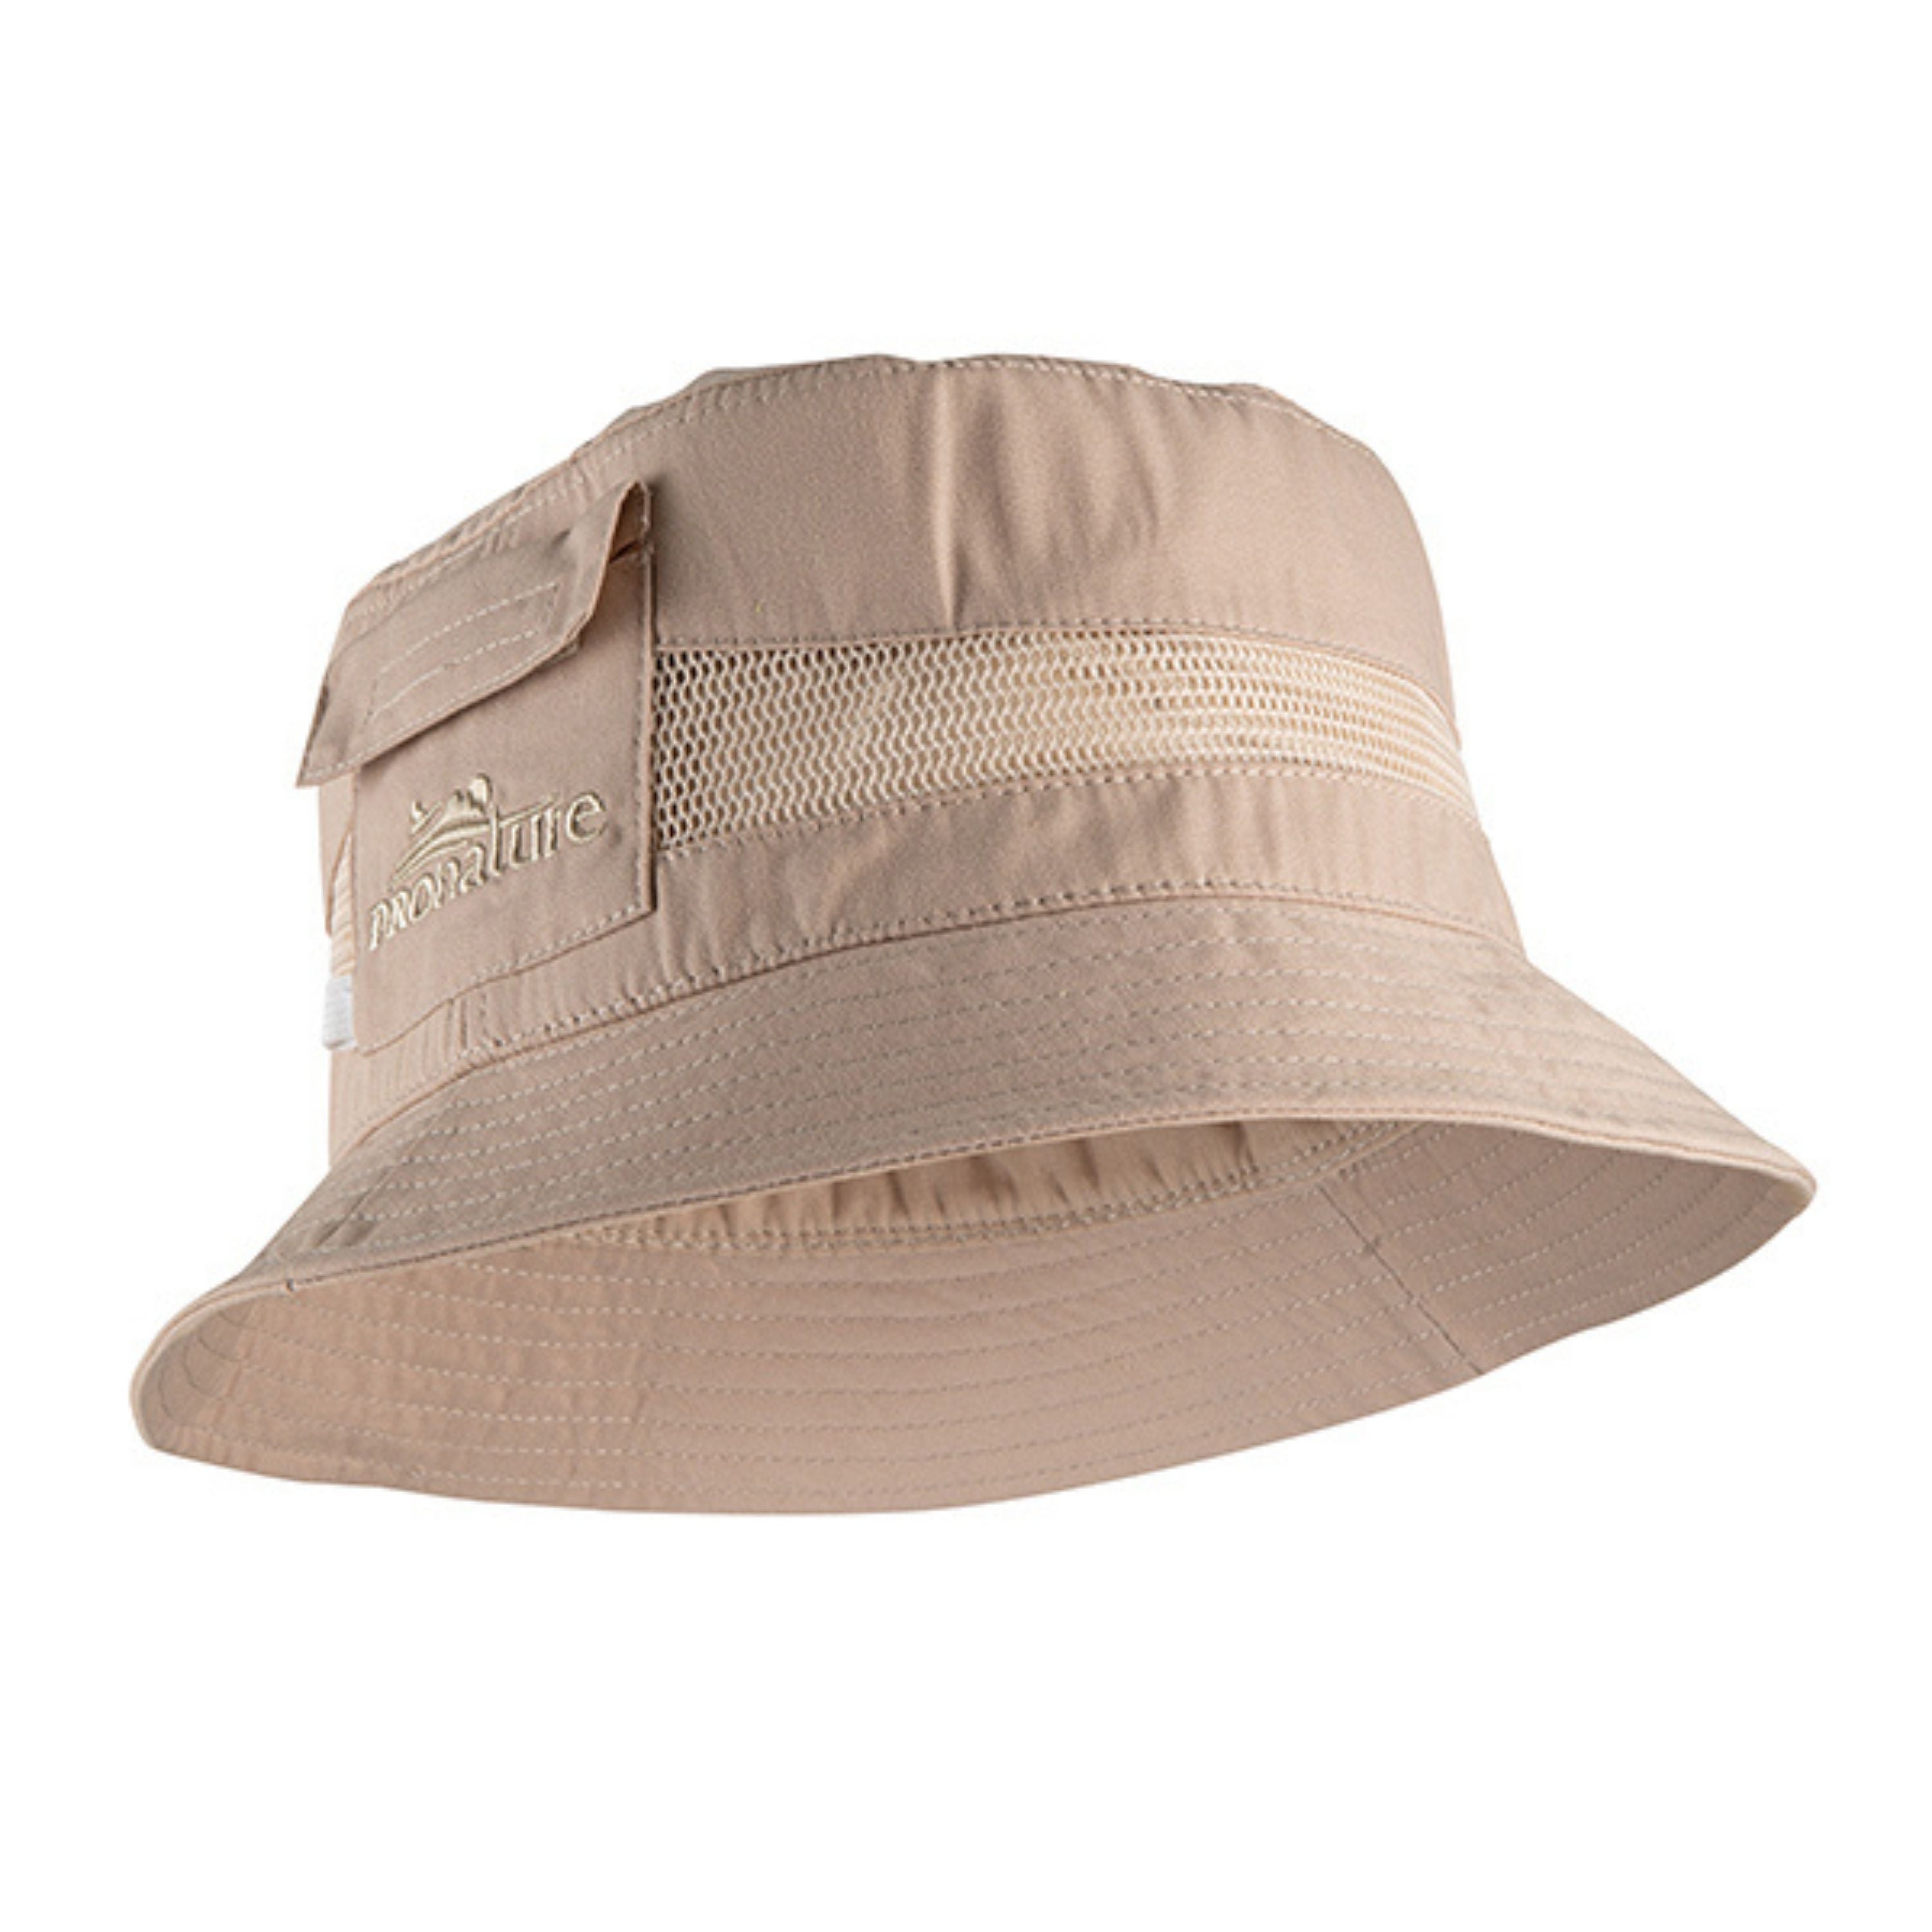 Bucket Fisher's hat - Unisex